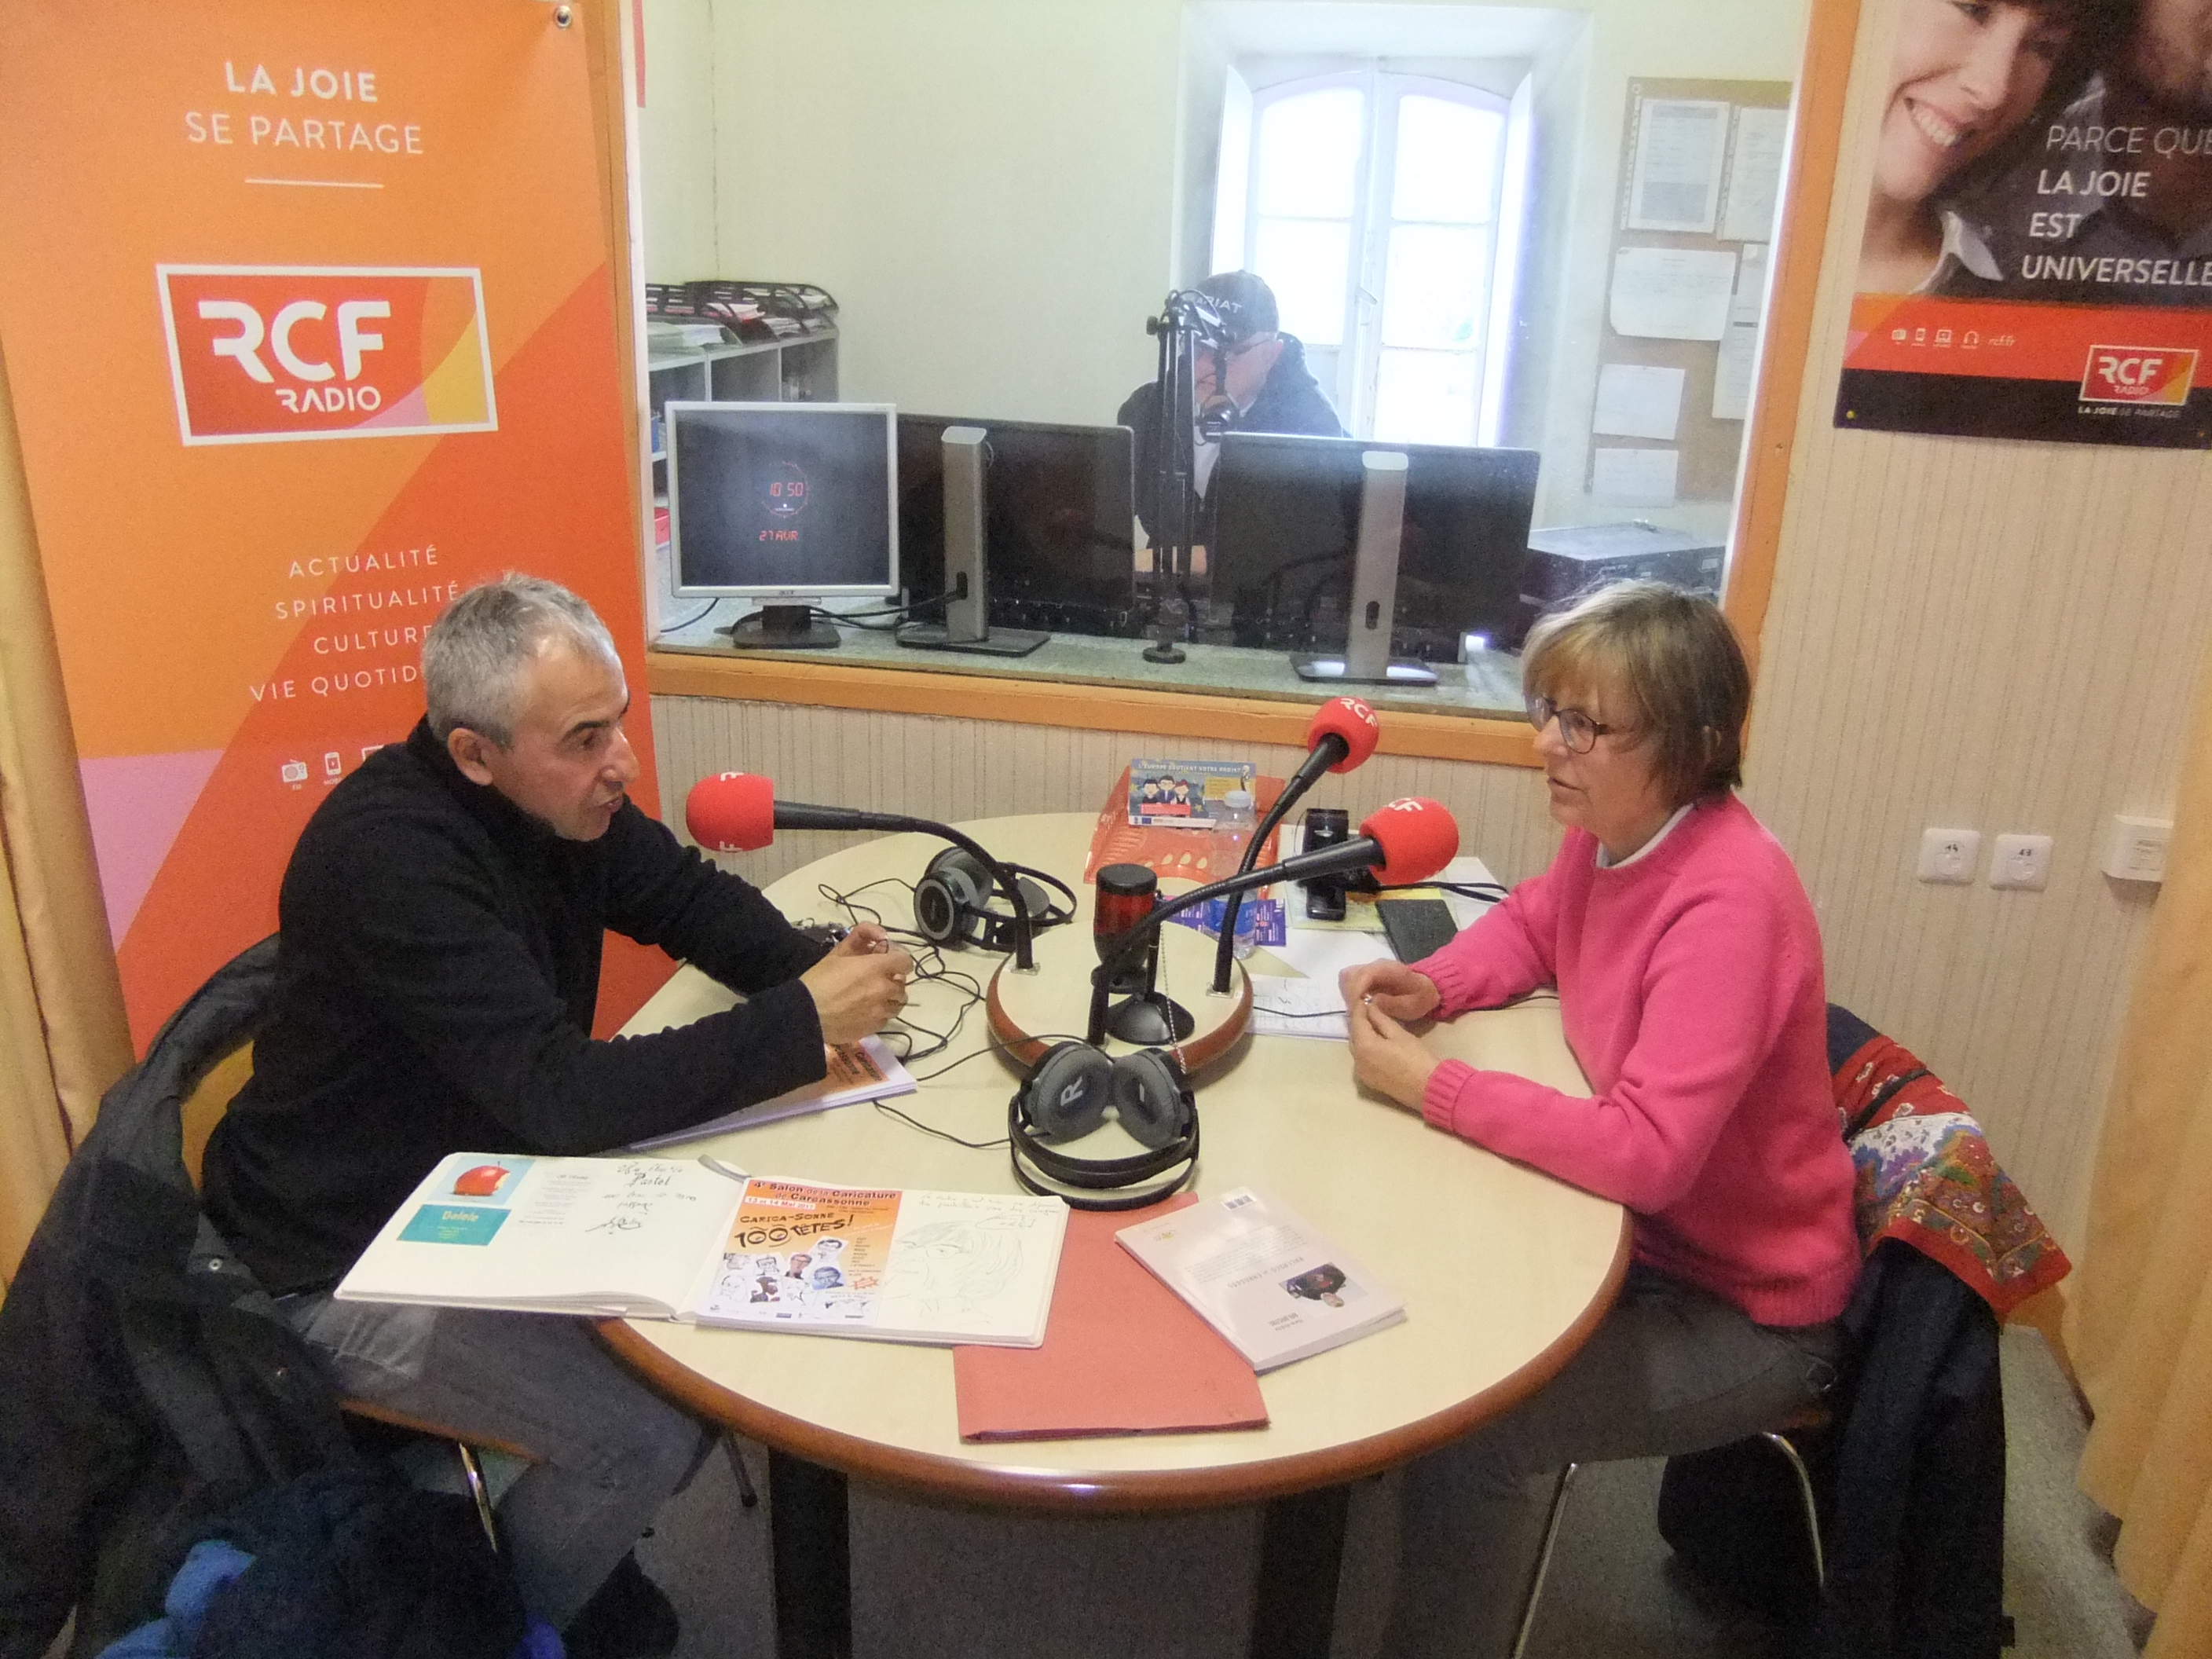 Radio RCF Carcassonne